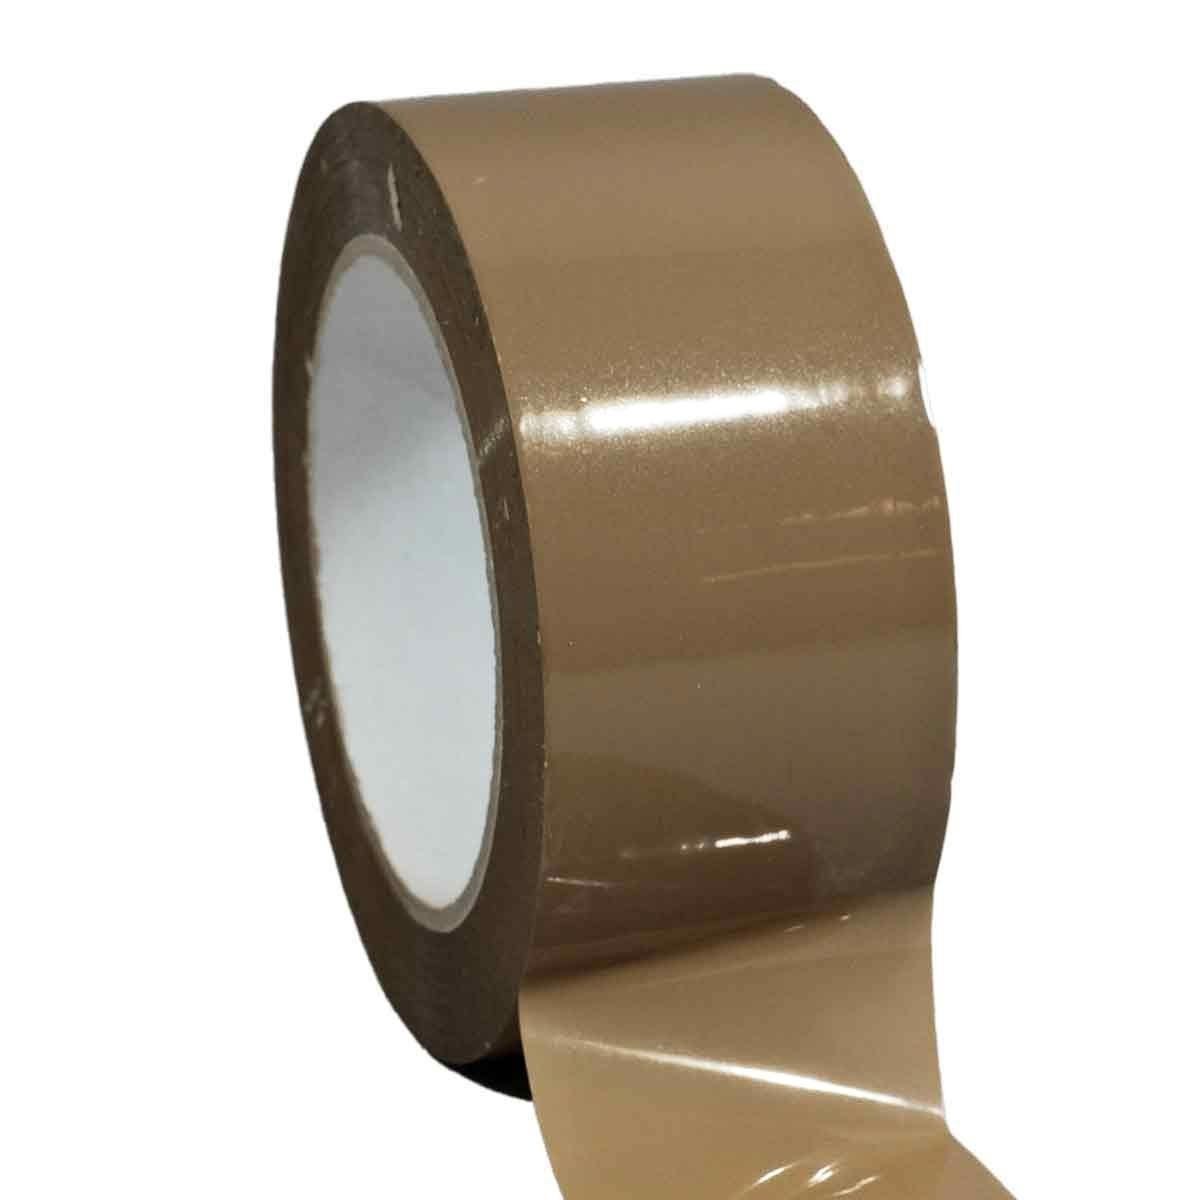 Ruban adhésif d'emballage polypropylène havane 28µ - rouleau adhésif marron 48 mm x 100 m - Carton de 36 1